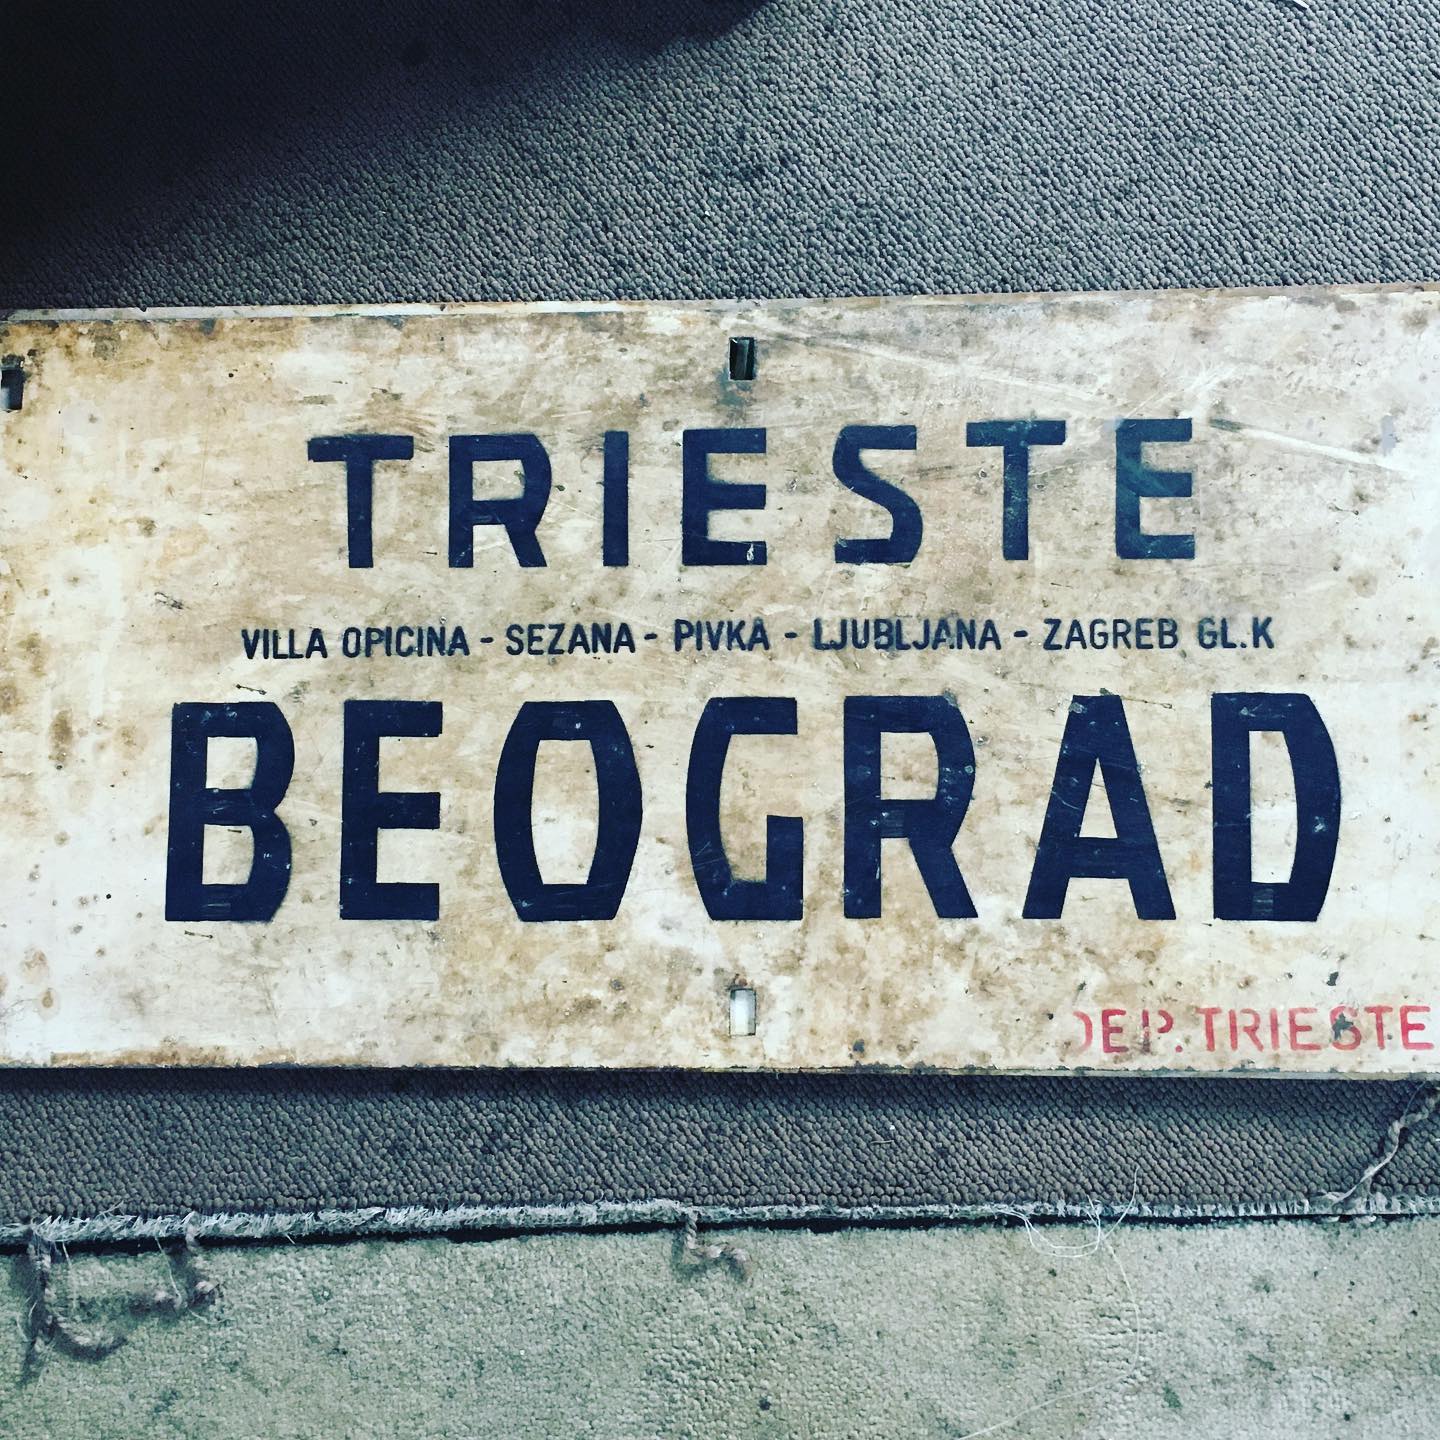 #TriesteBeograd #TrainsForEurope